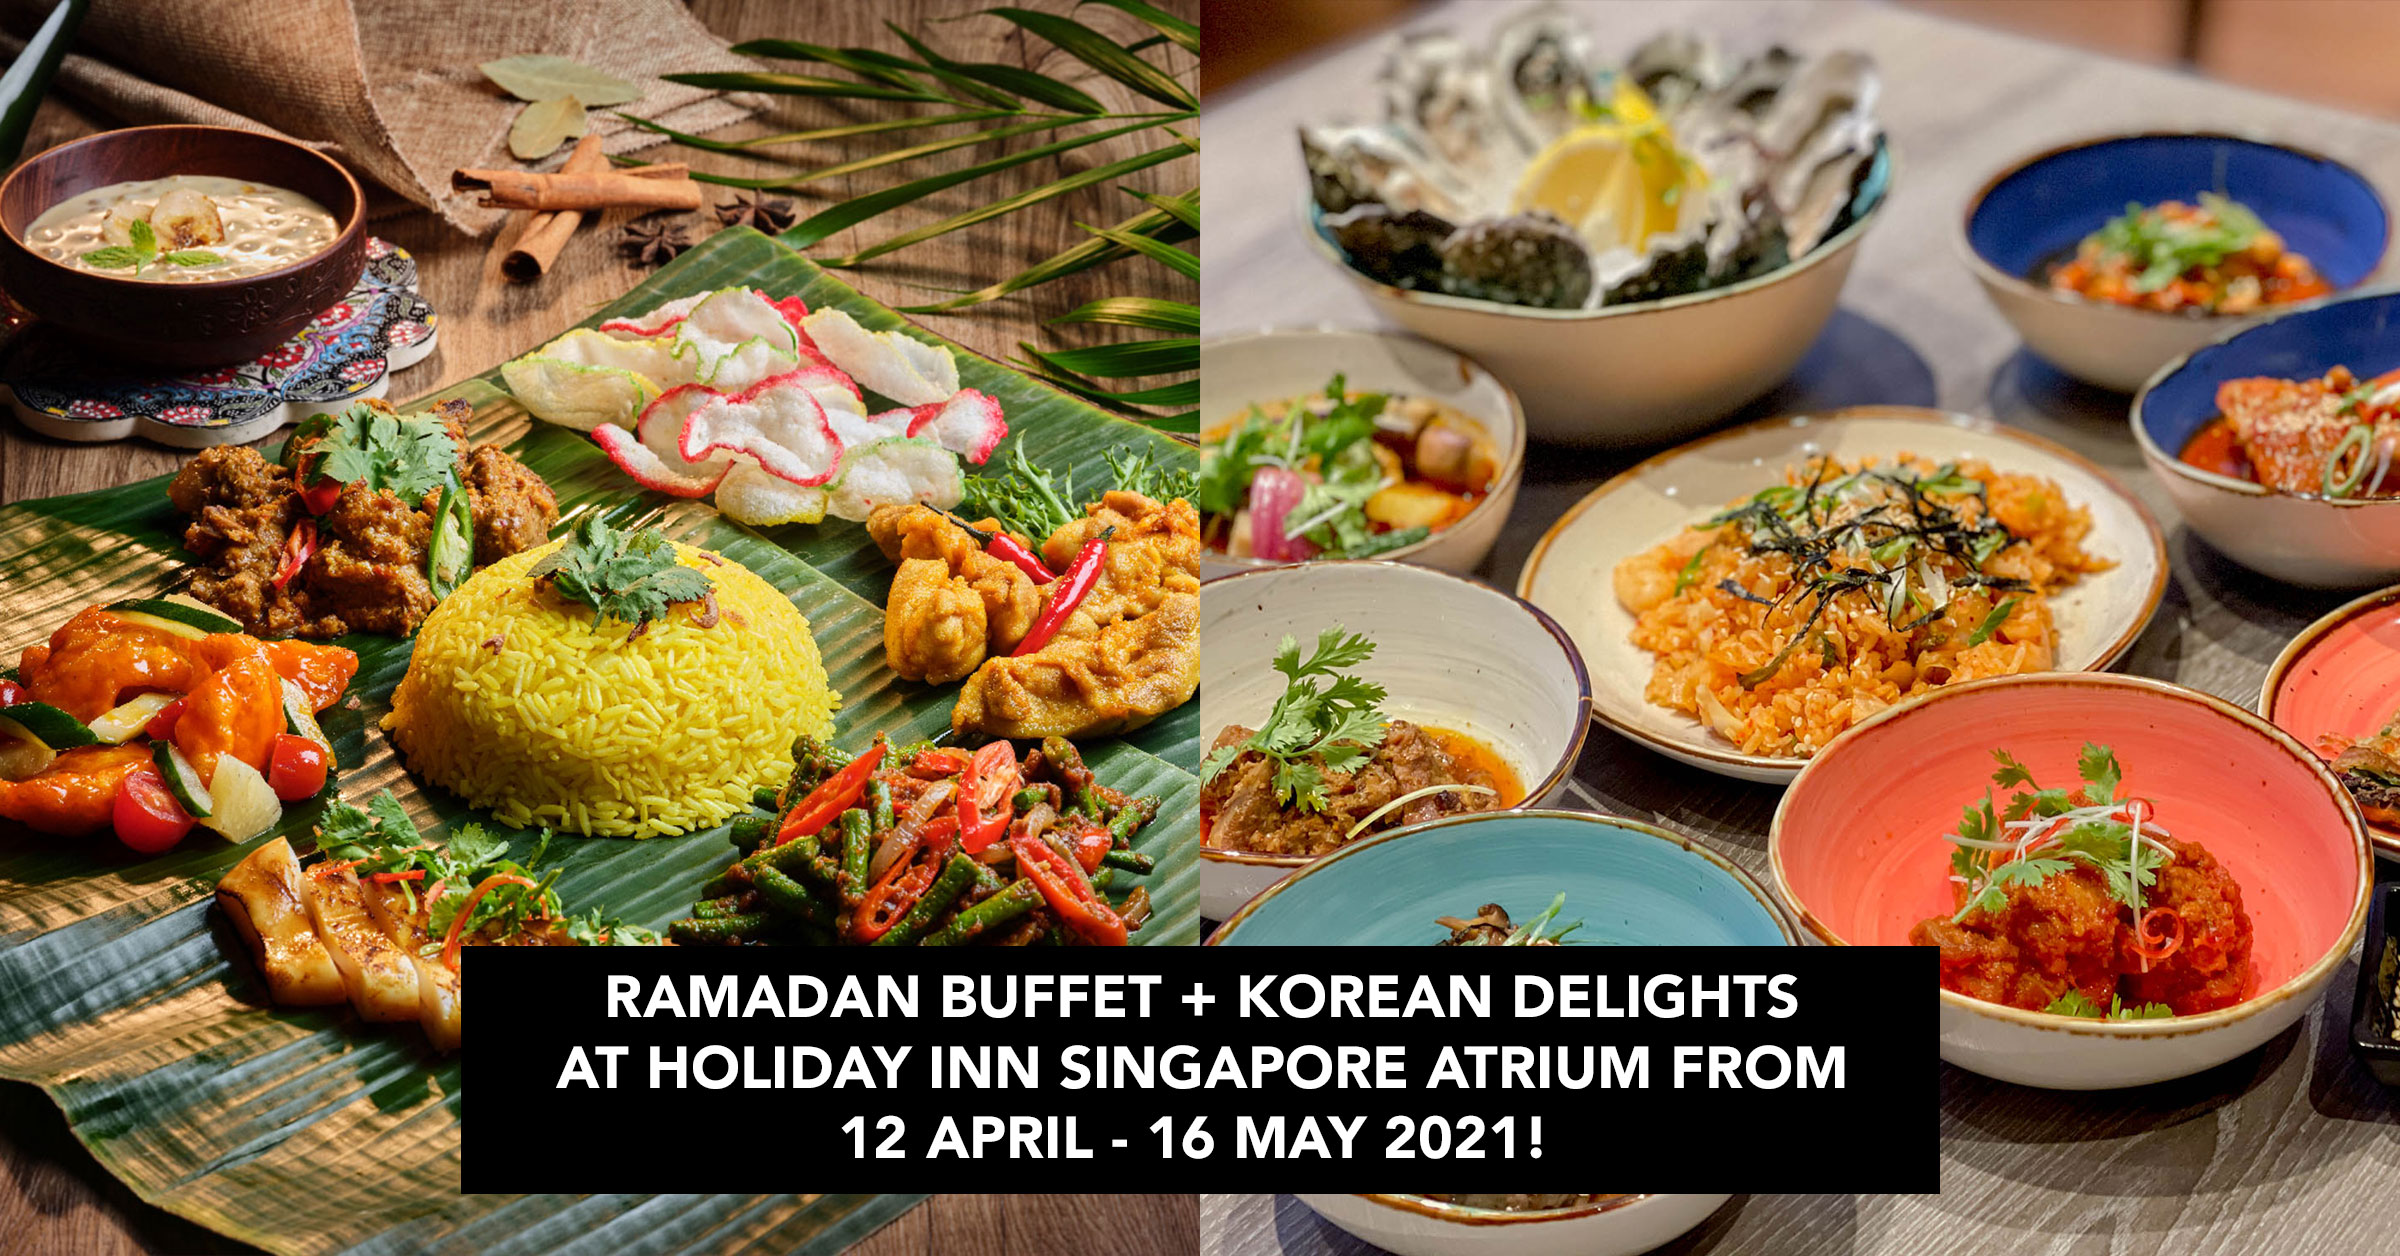 Holiday-Inn-Atrium-Singapore-Ramadan-Buffet-2021-darrenbloggie_featured